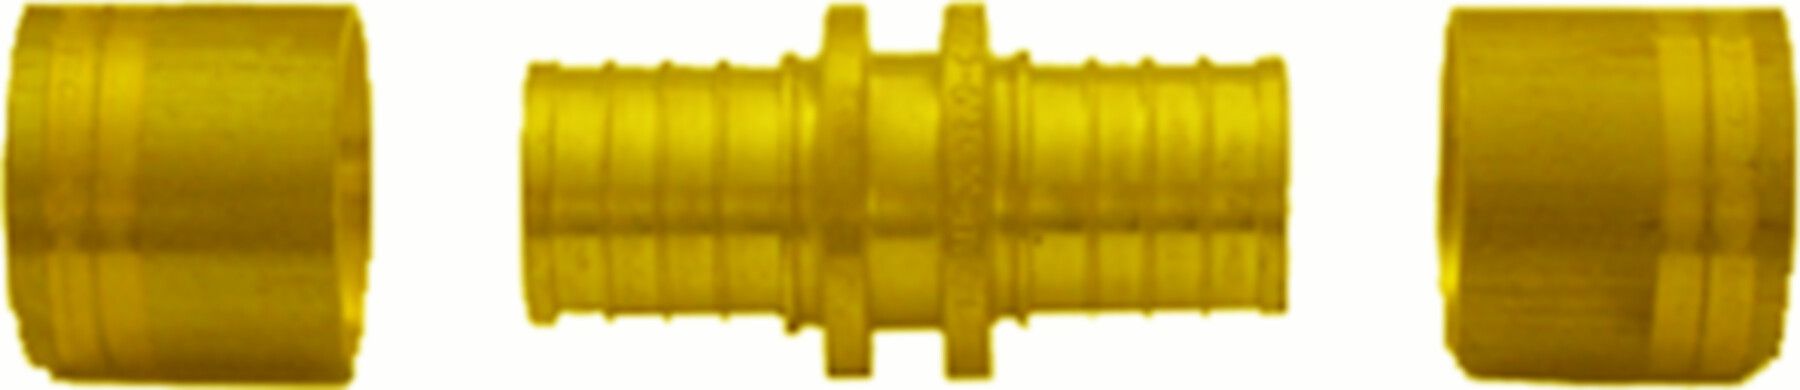 Press-Verbindungskupplung PVK egal S - 25 ø 25/3.5 mm - Isopex Fernwärmeleitung